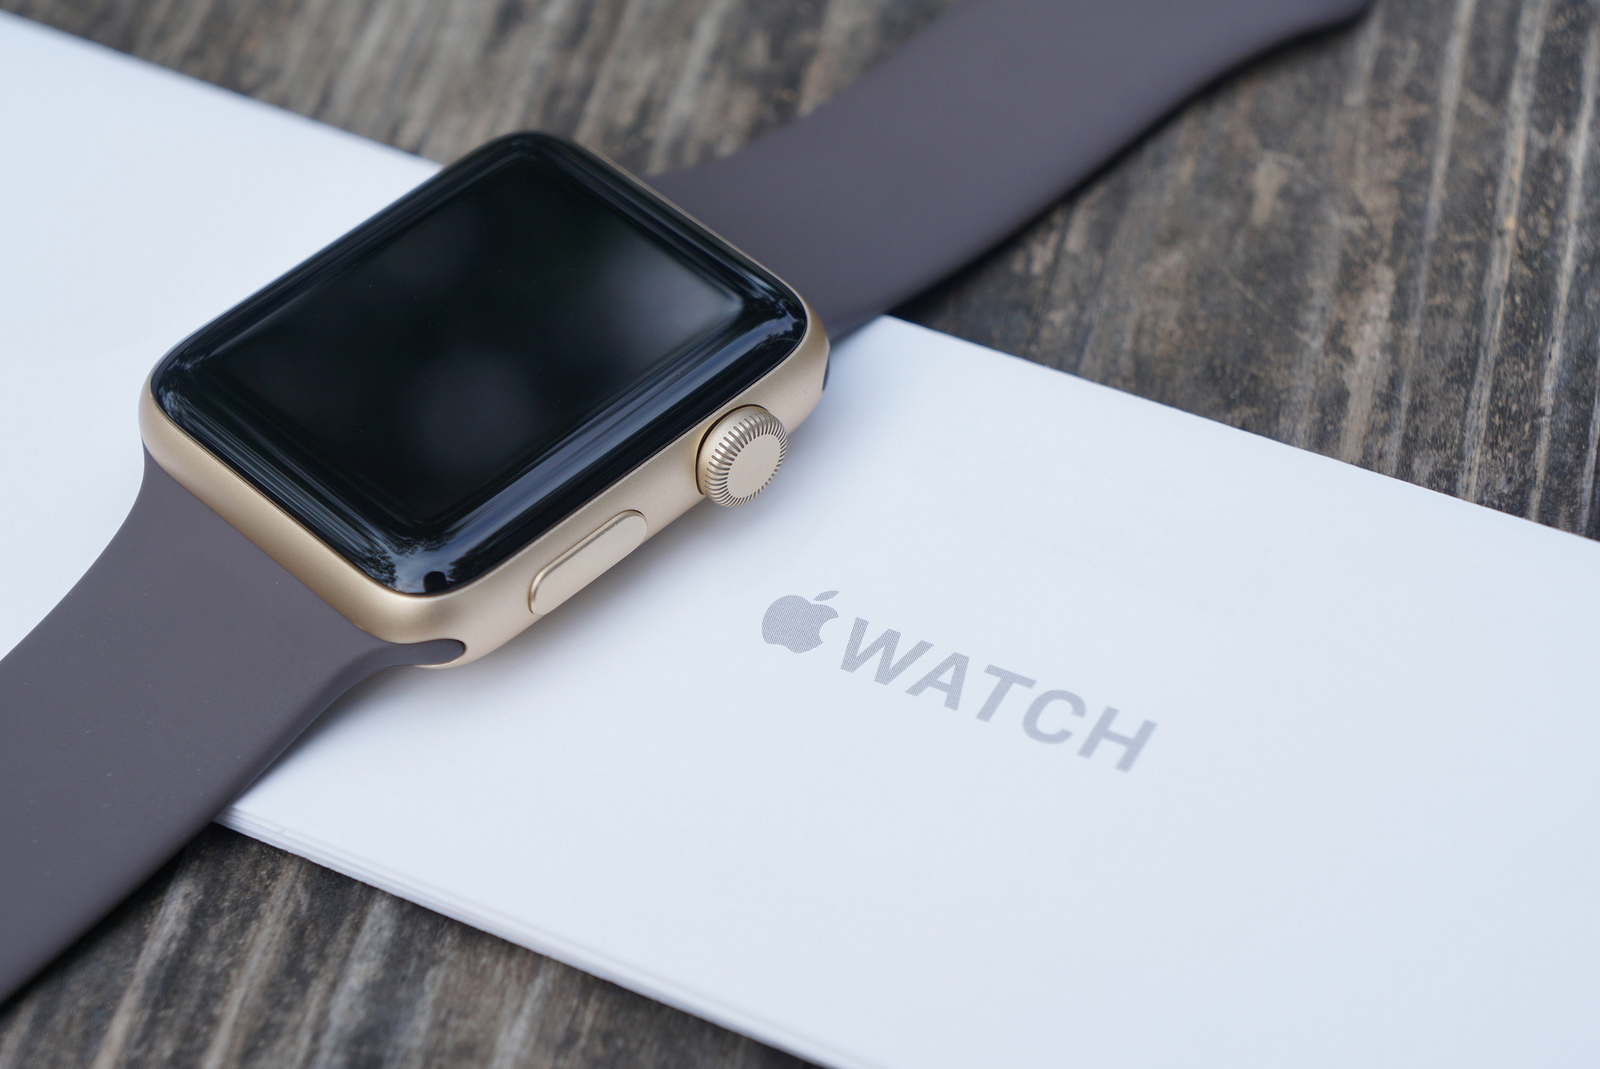 「Apple Watch Series 3」、電池持ち向上で9月発表か。週1〜2回の充電に期待